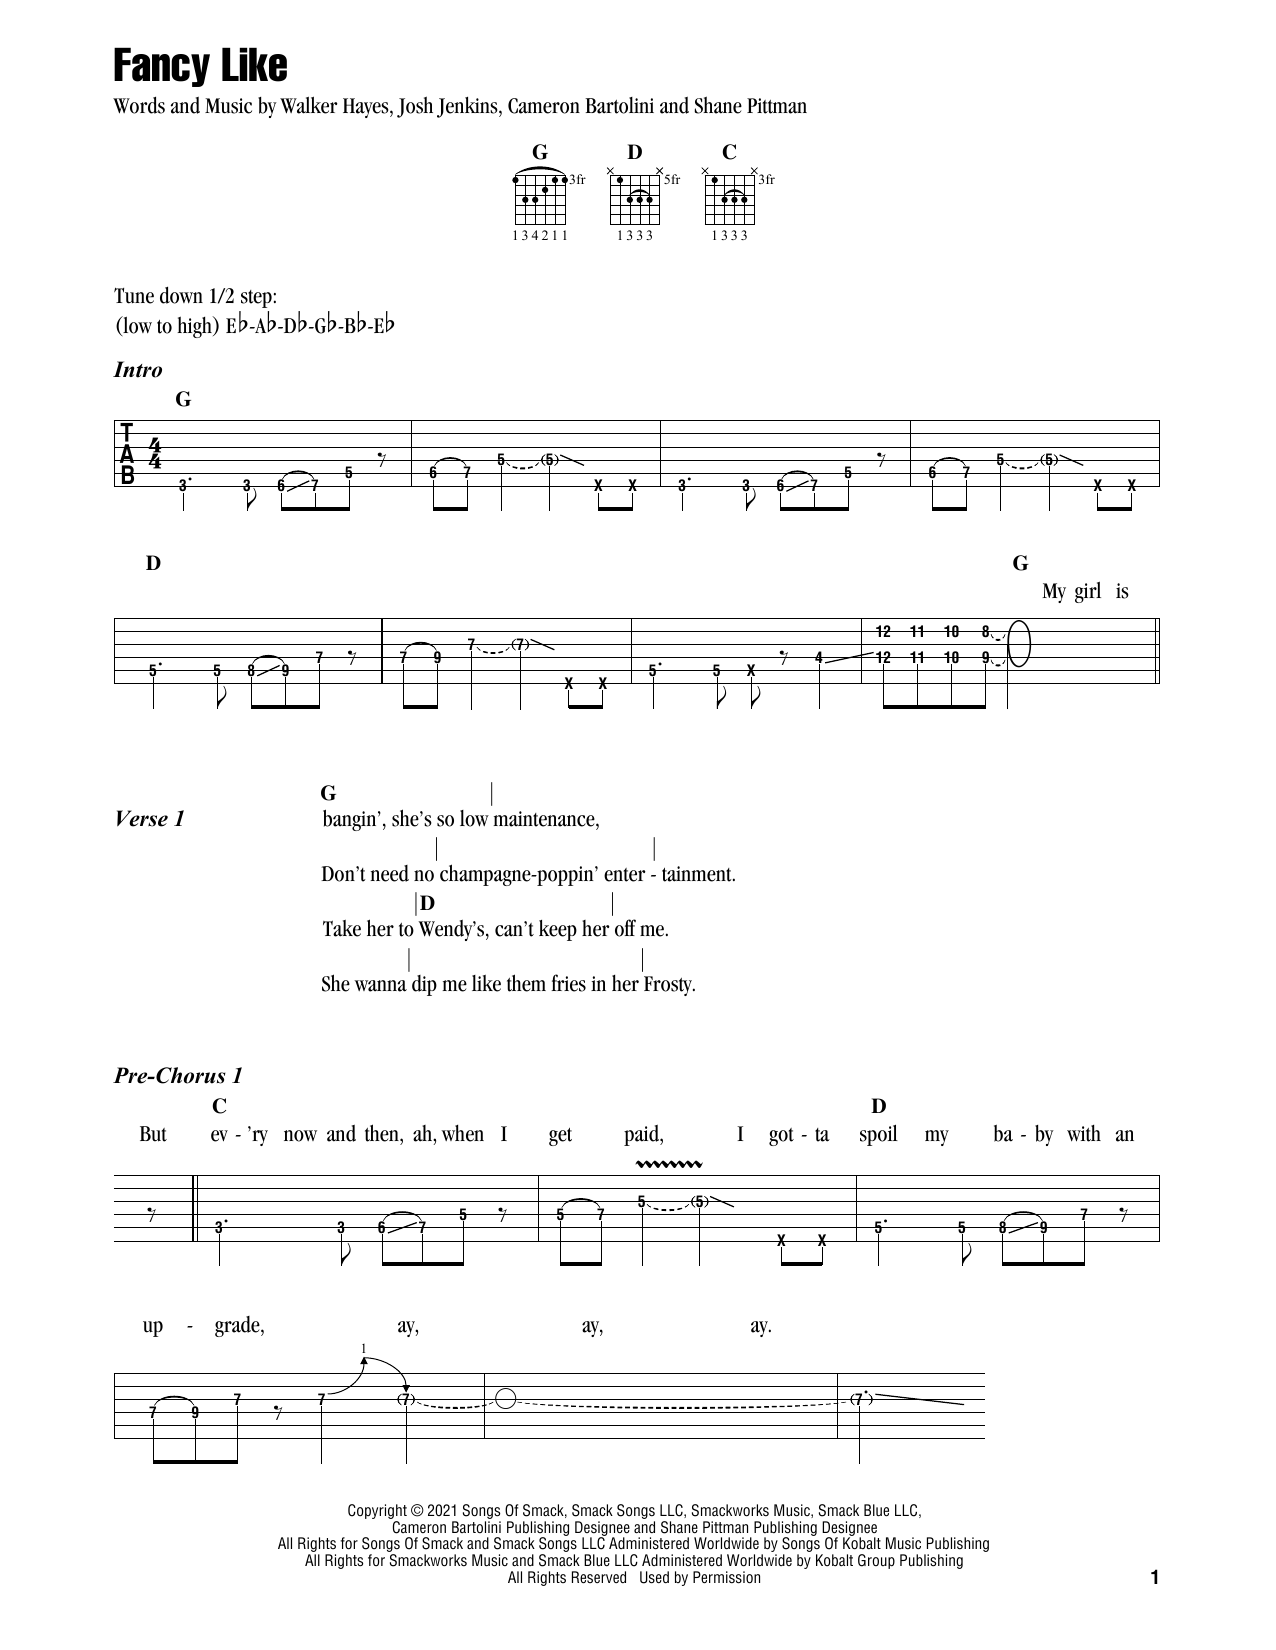 Walker Hayes Fancy Like Sheet Music Notes & Chords for Guitar Chords/Lyrics - Download or Print PDF